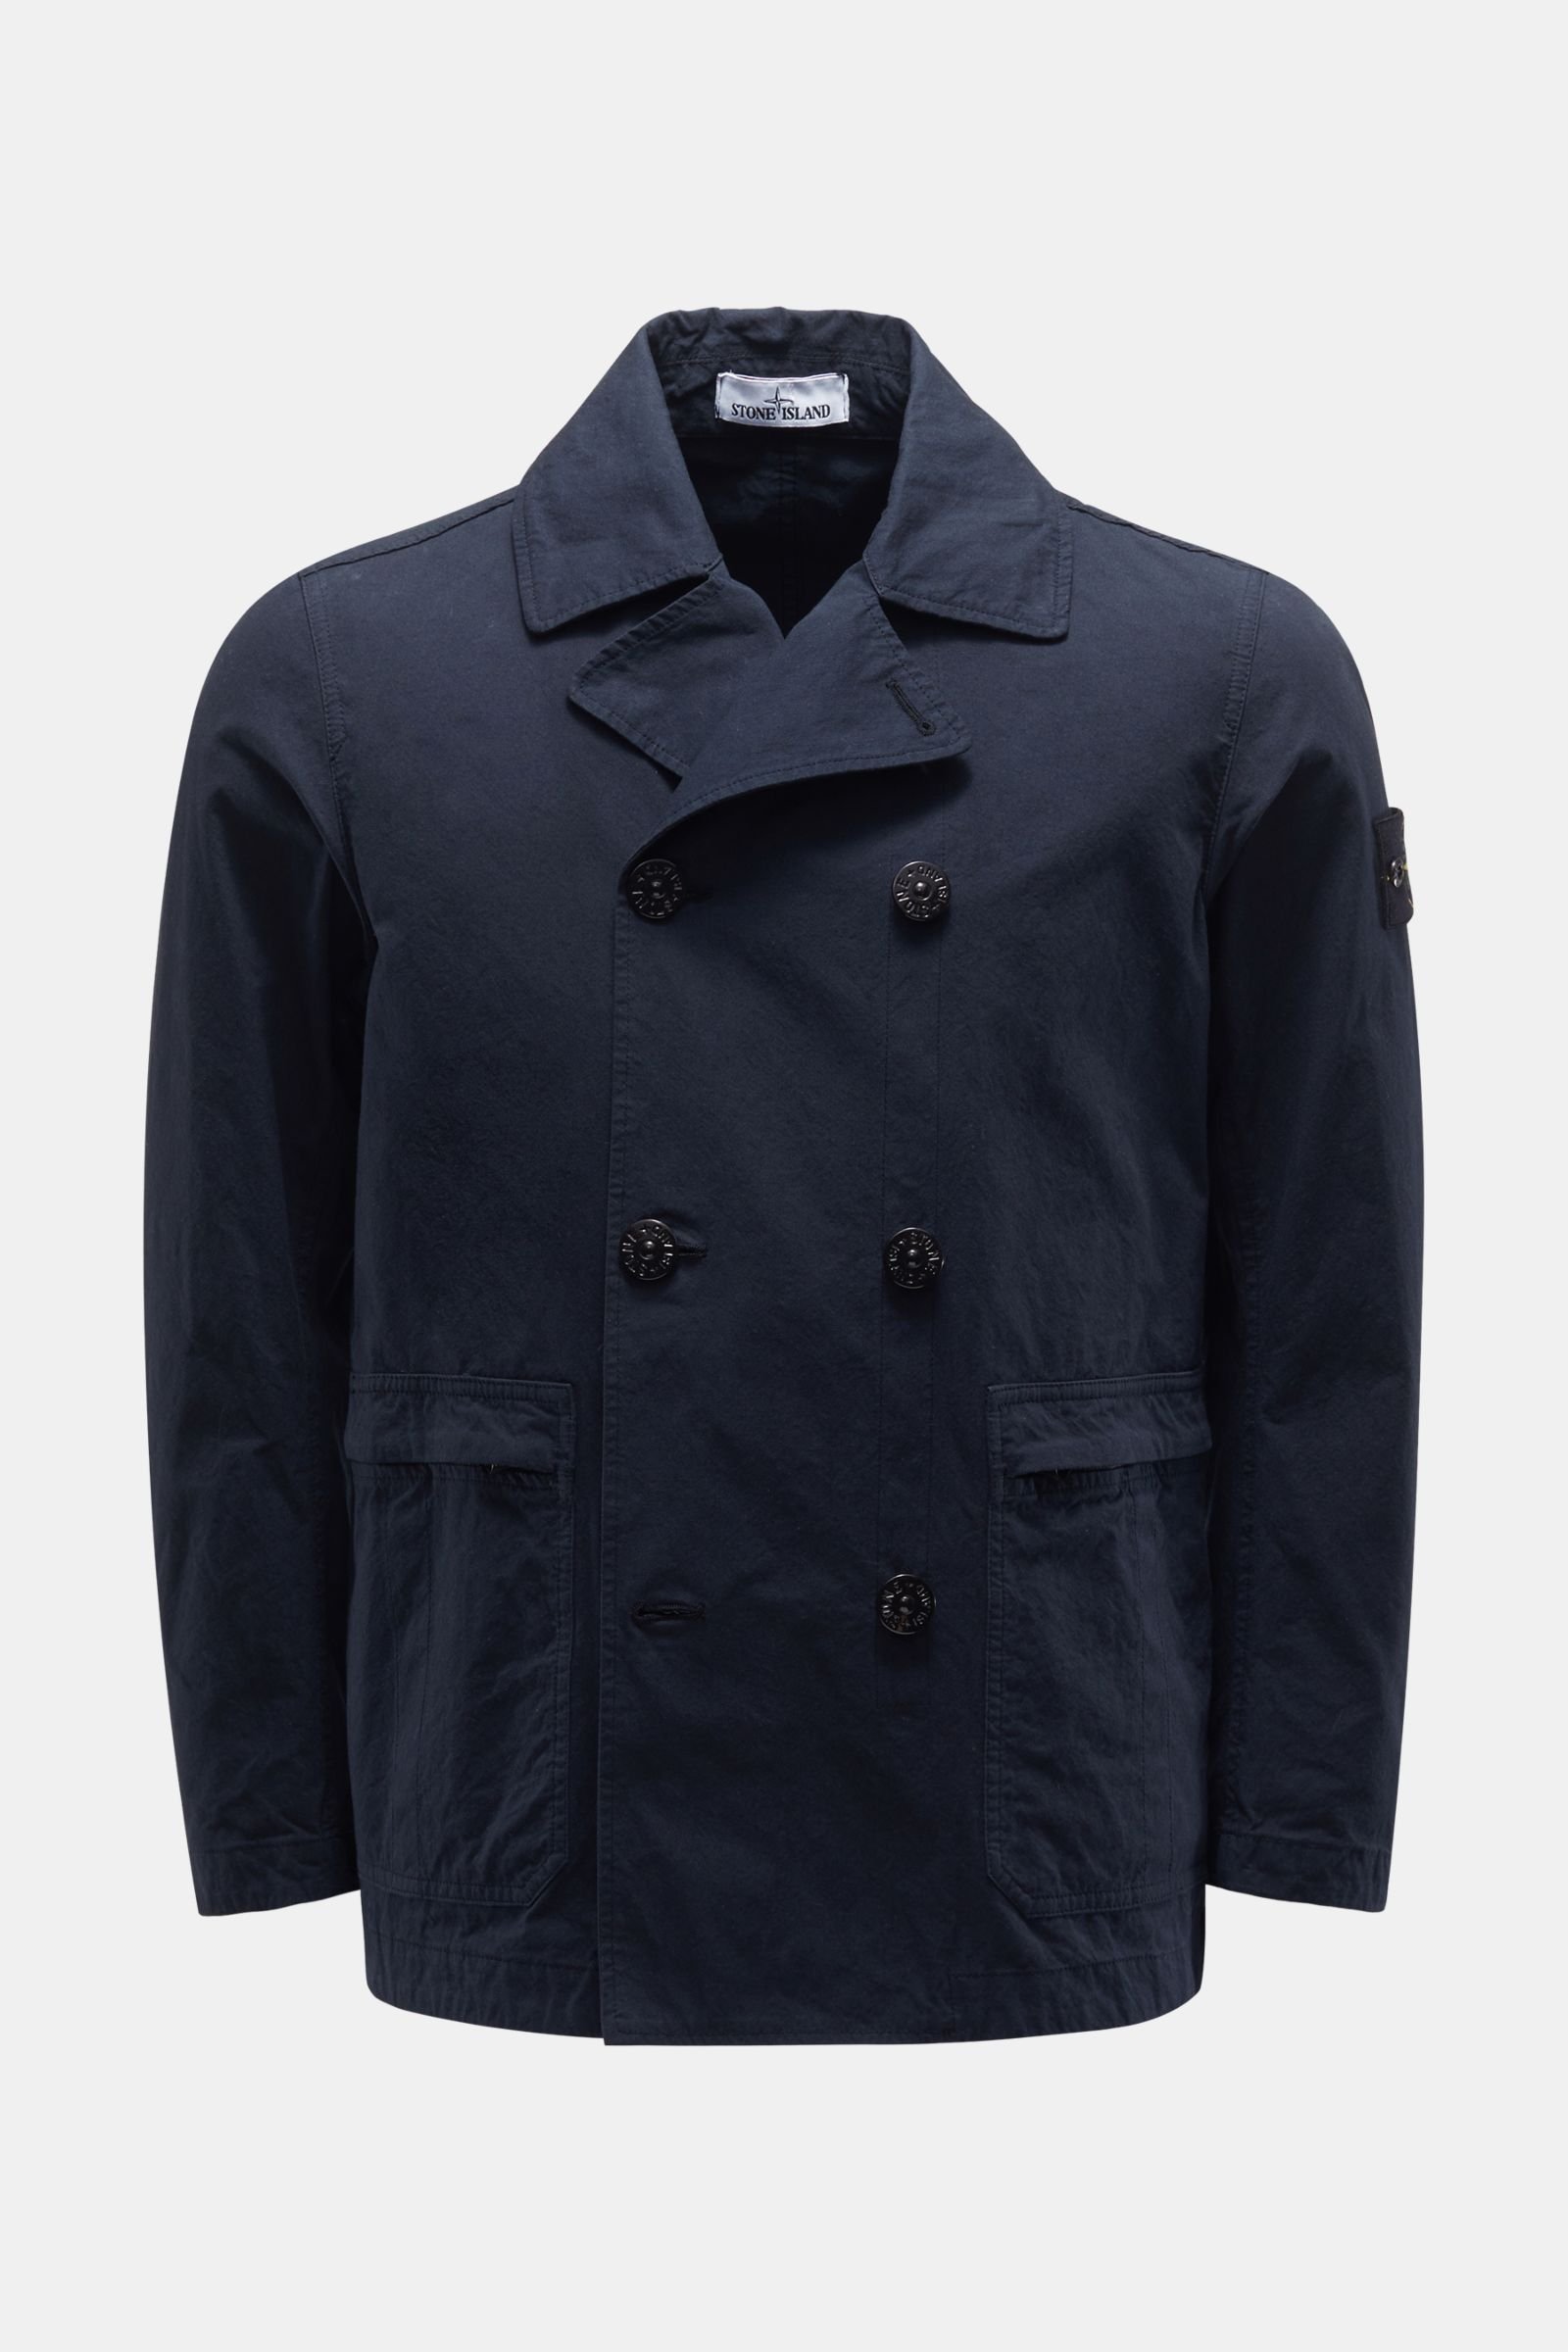 Jacket 'Cotton/Cordura' navy